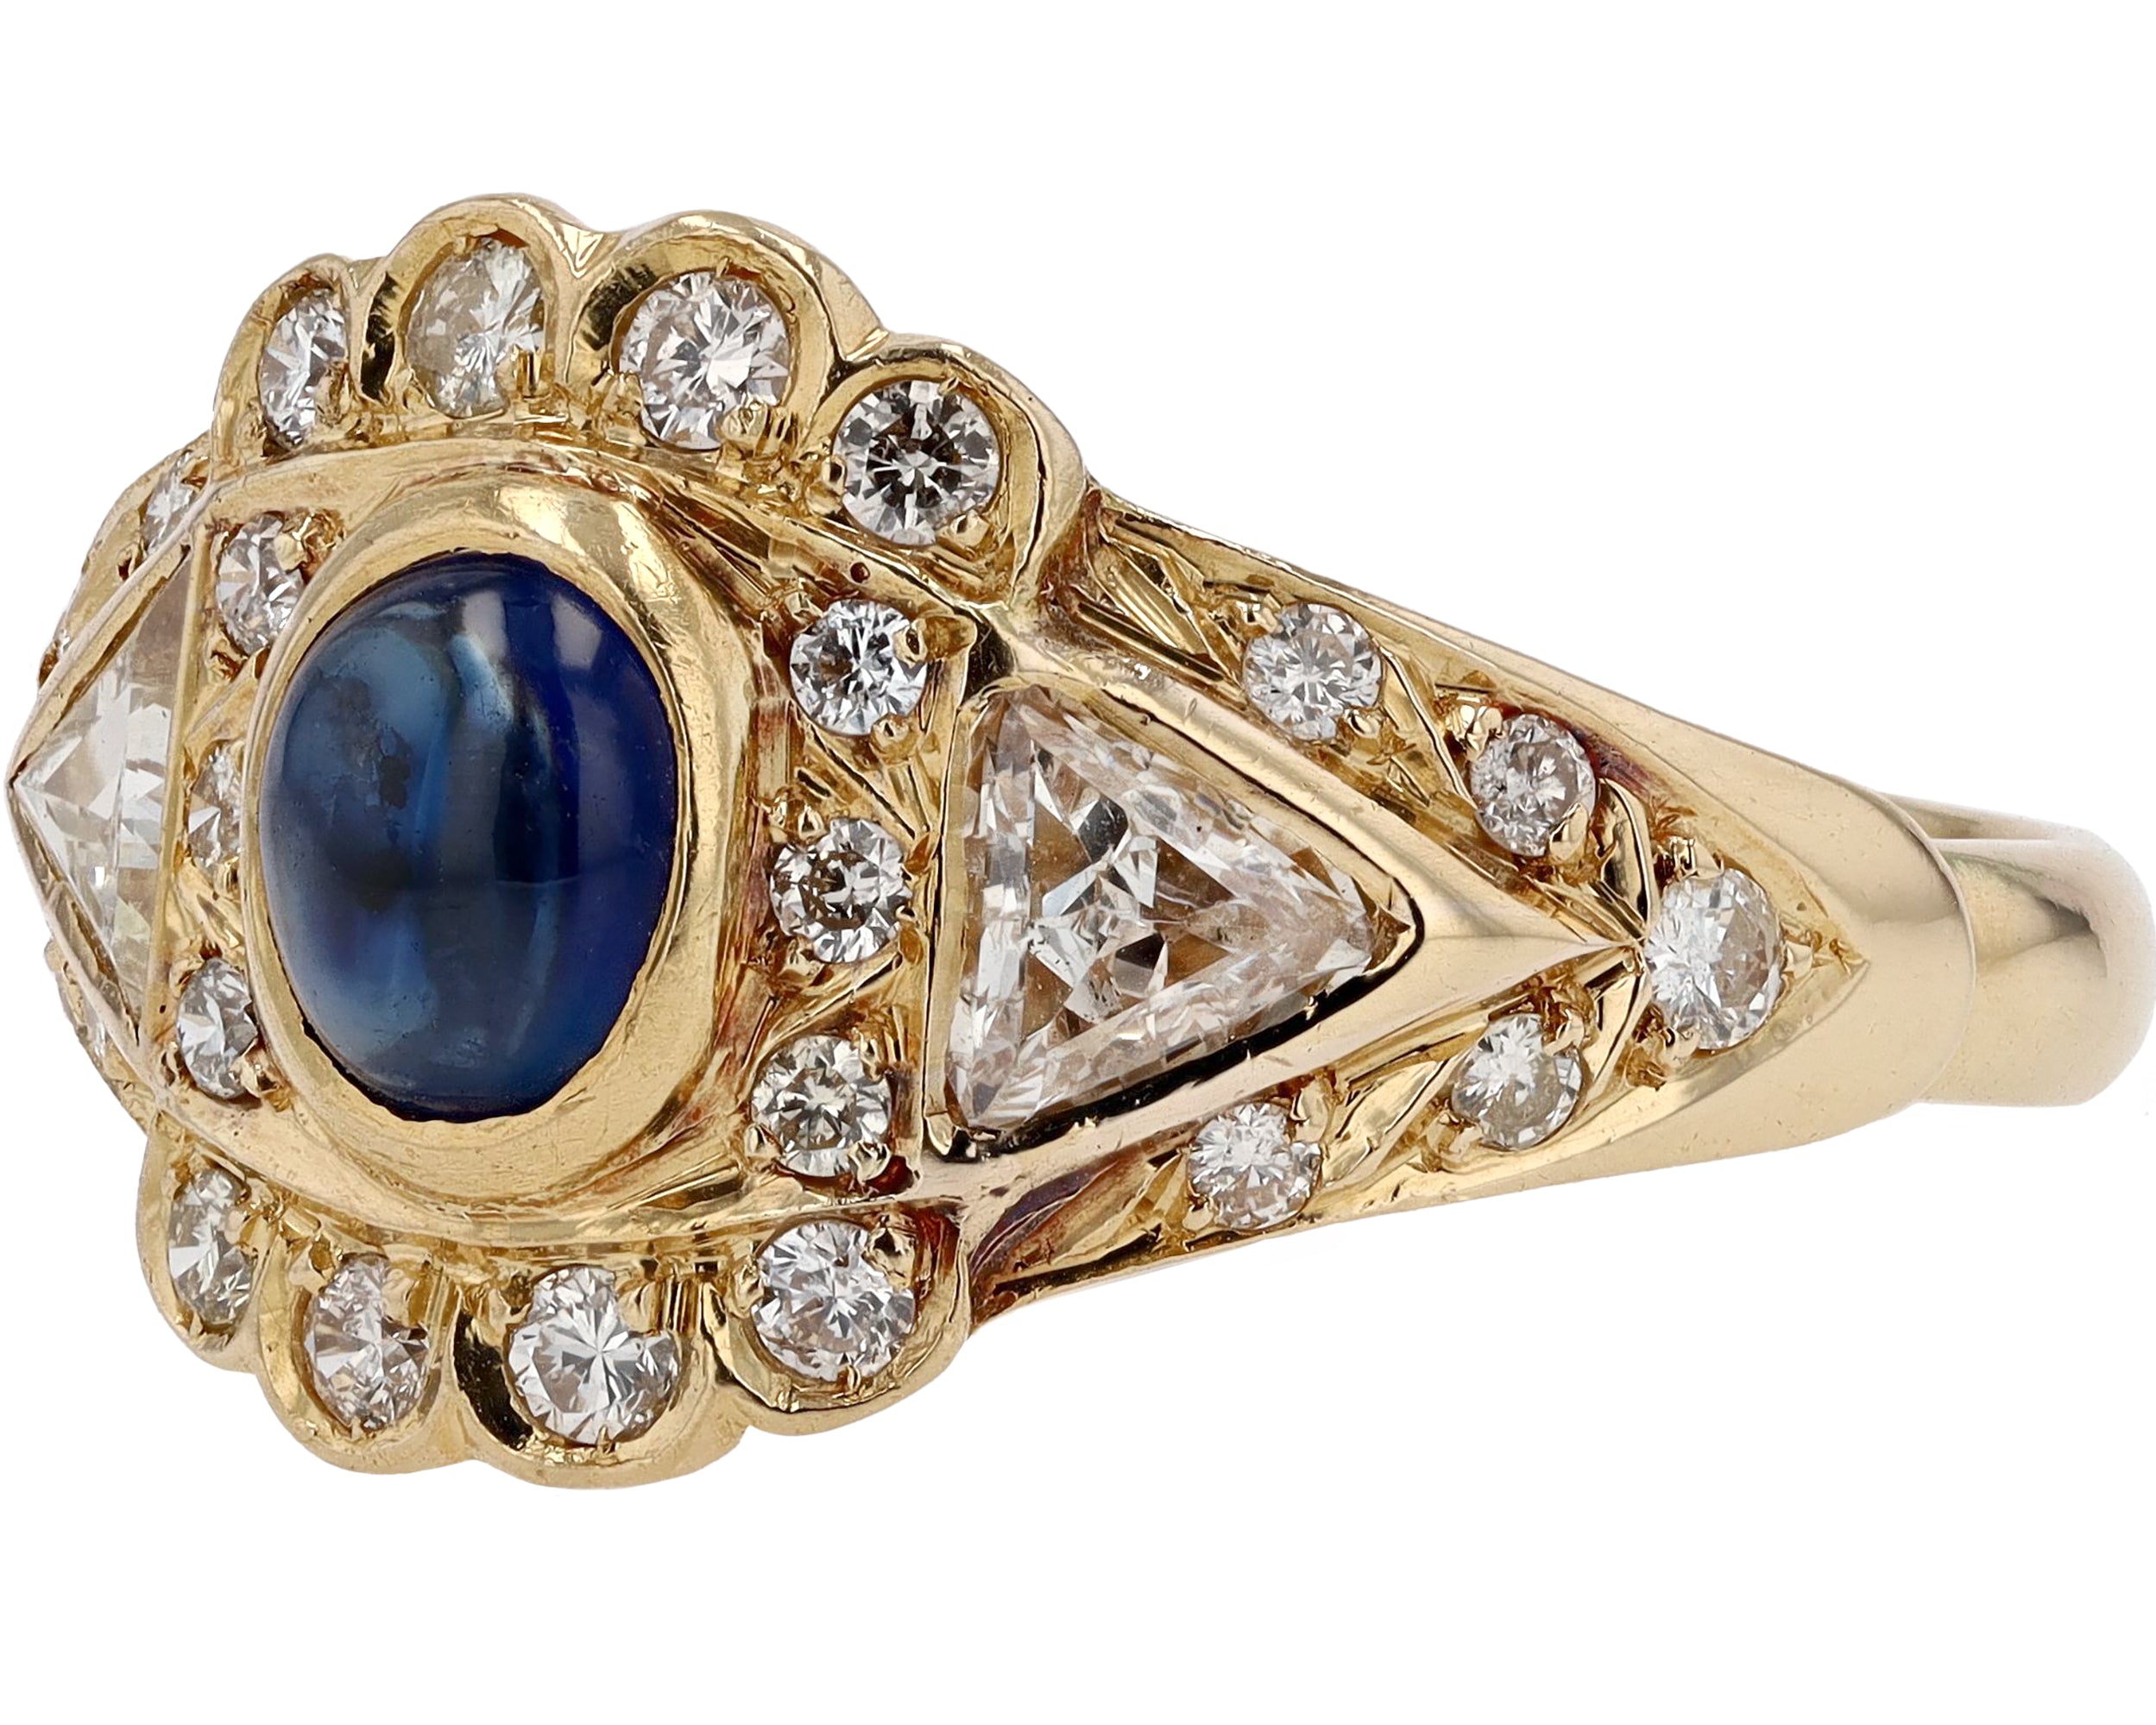 Vintage Portuguese Sapphire Diamond Engagement Ring